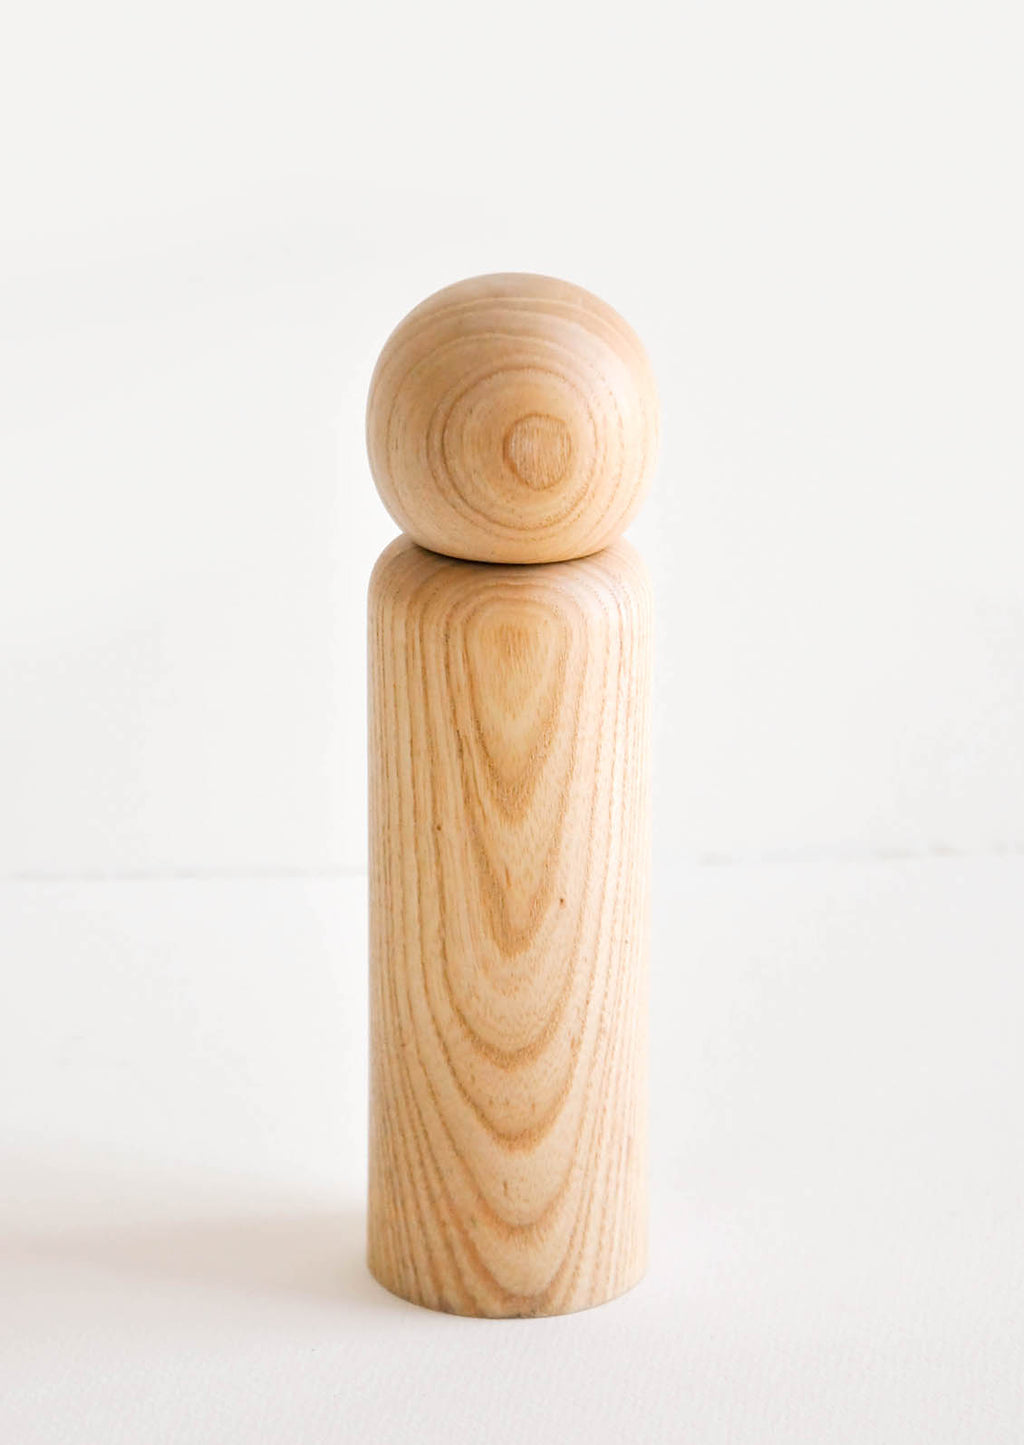 Light Ash: Minimal salt grinder in a light wood showing a curvy grain pattern.